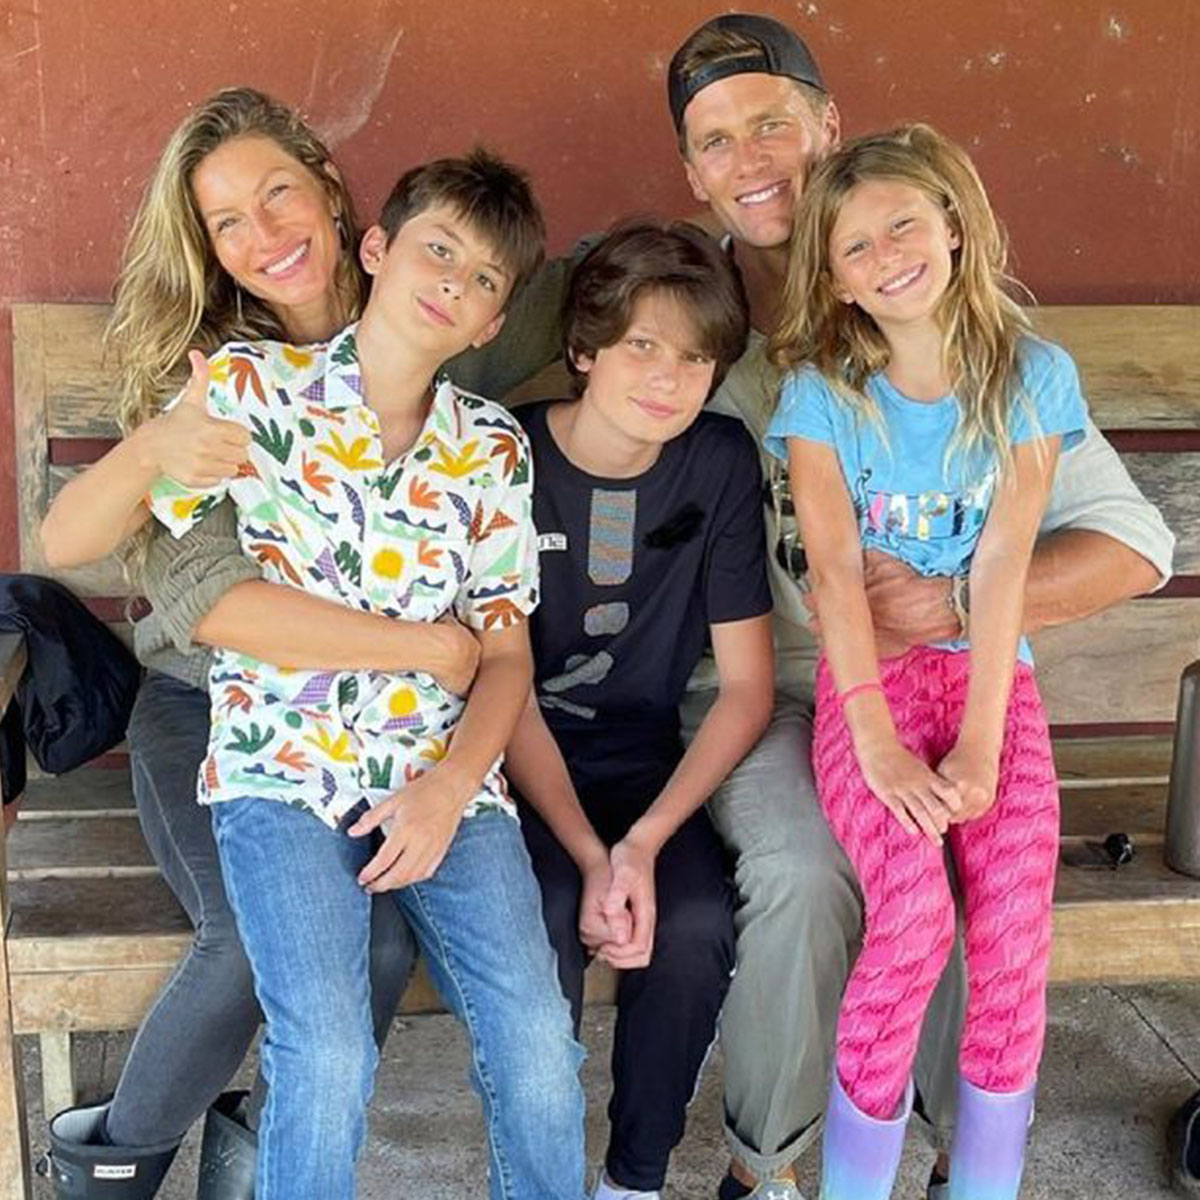 Tom Brady, Gisele Bündchen with Son  Most Photogenic Family Ever - ABC News